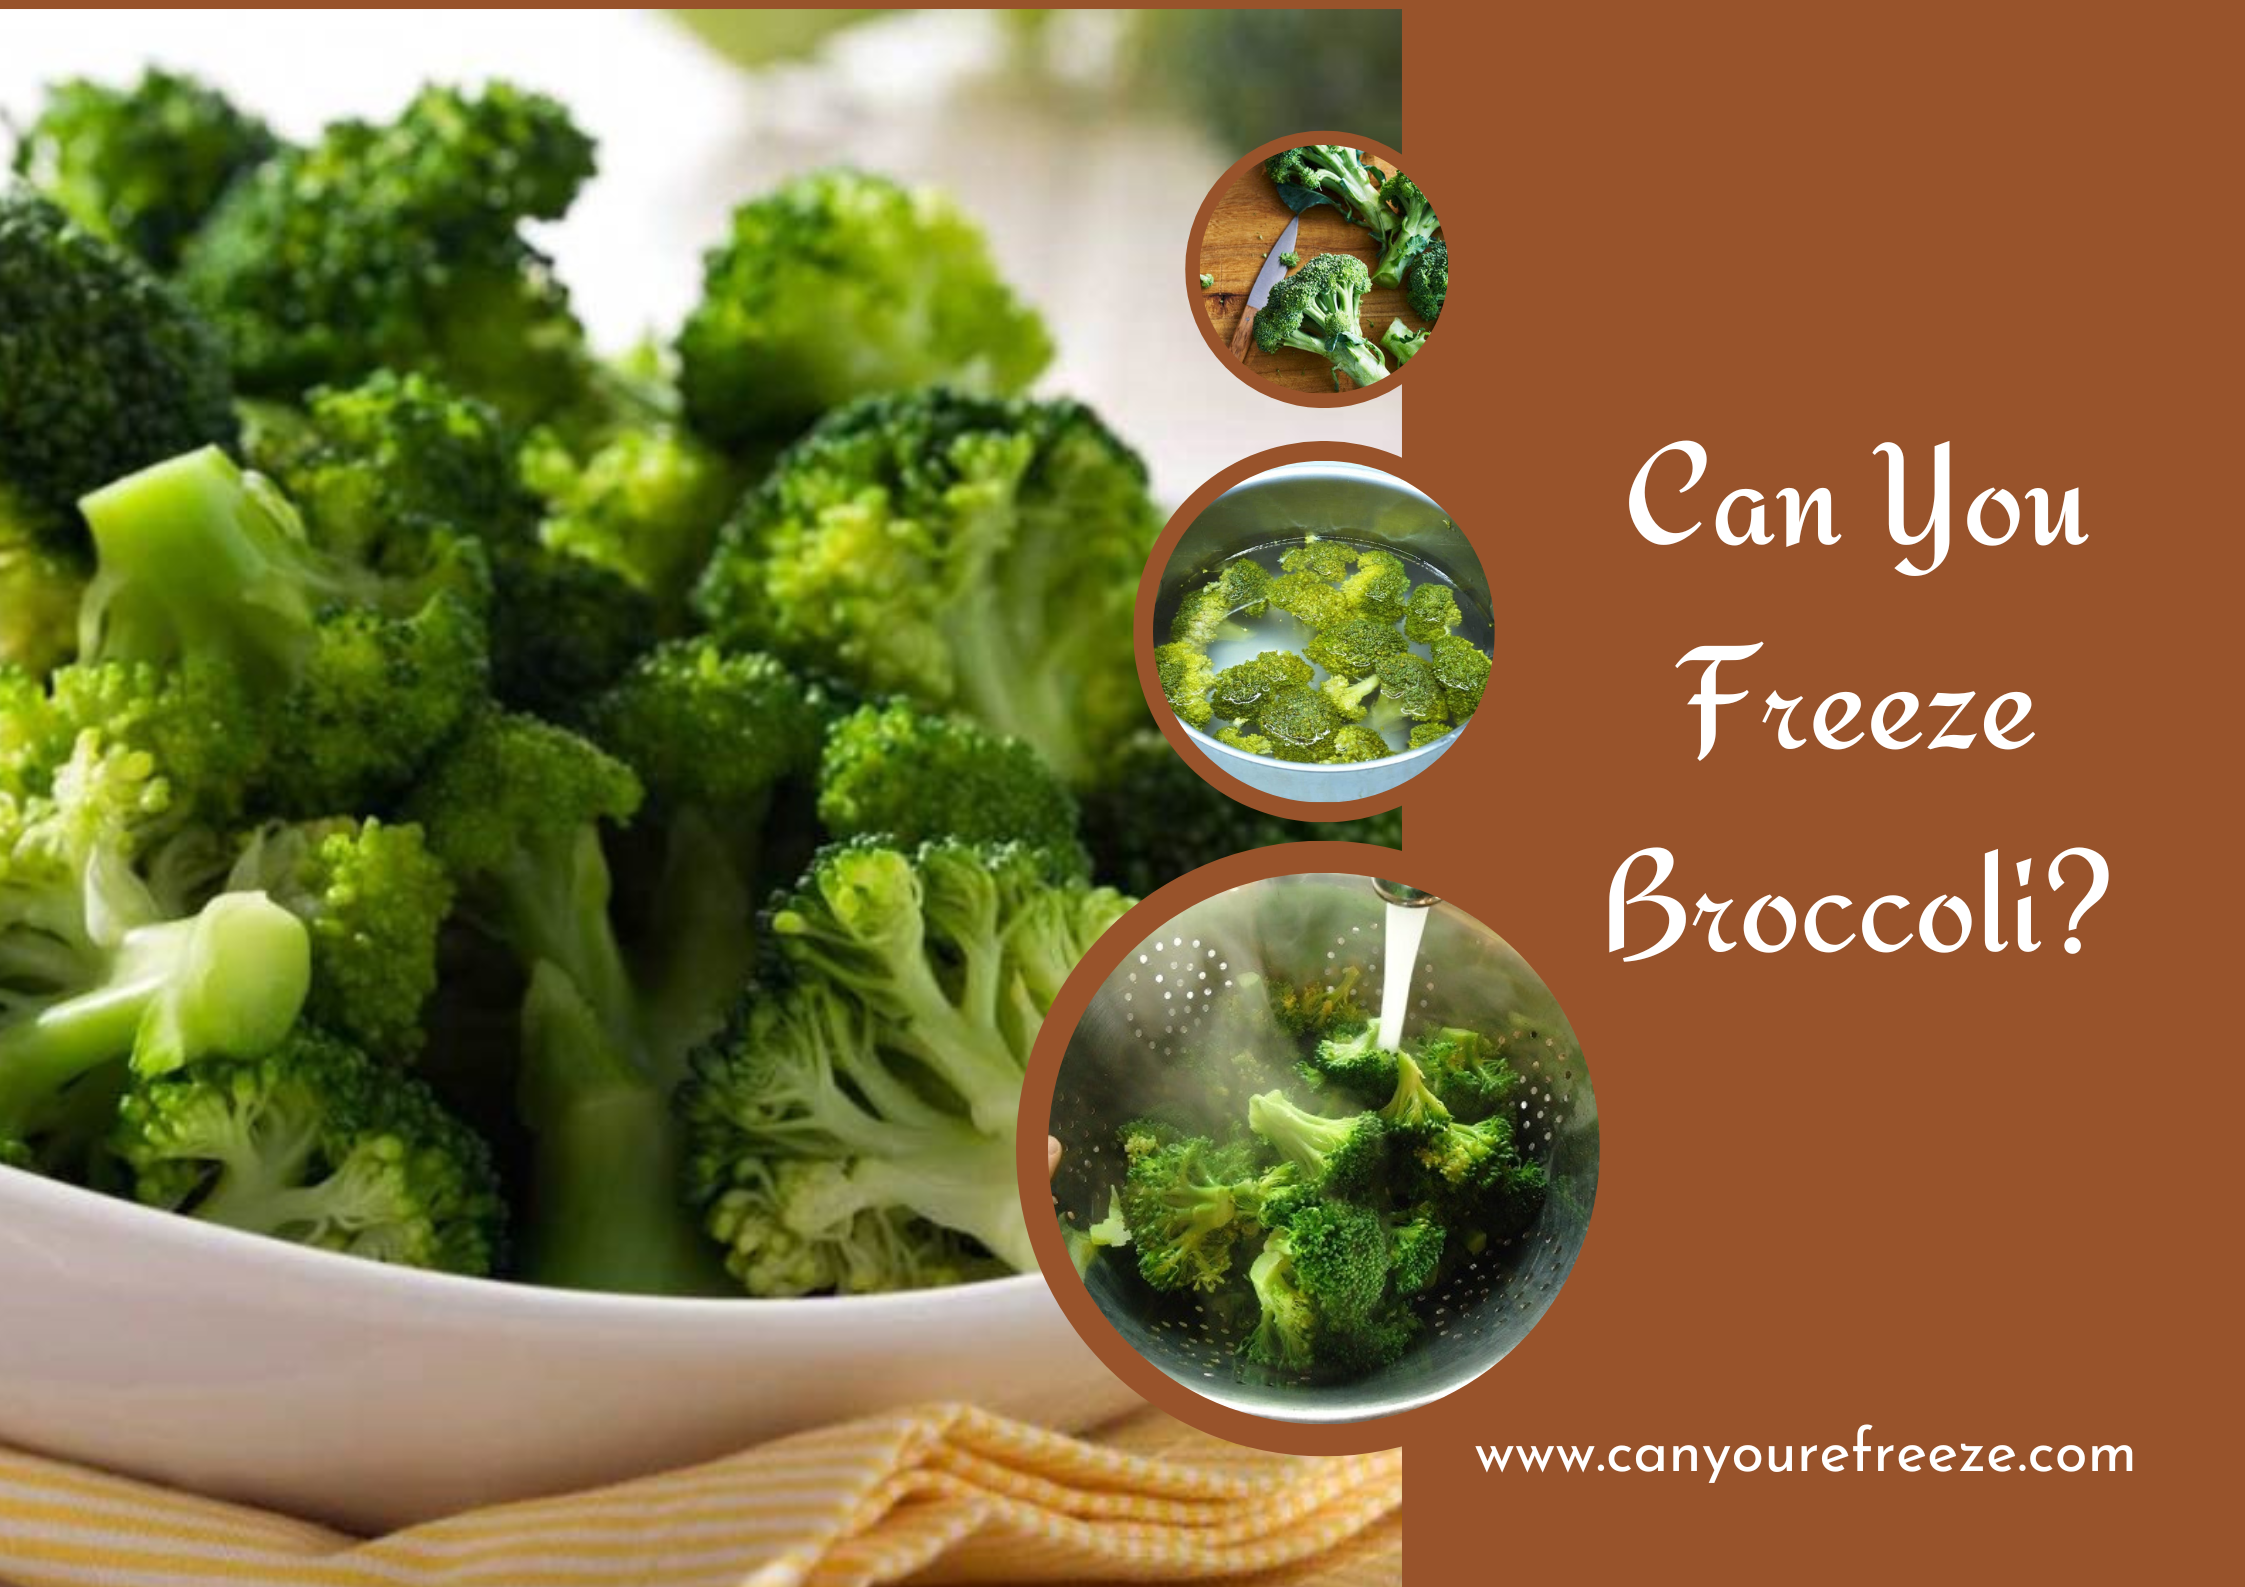 Can You Freeze Broccoli